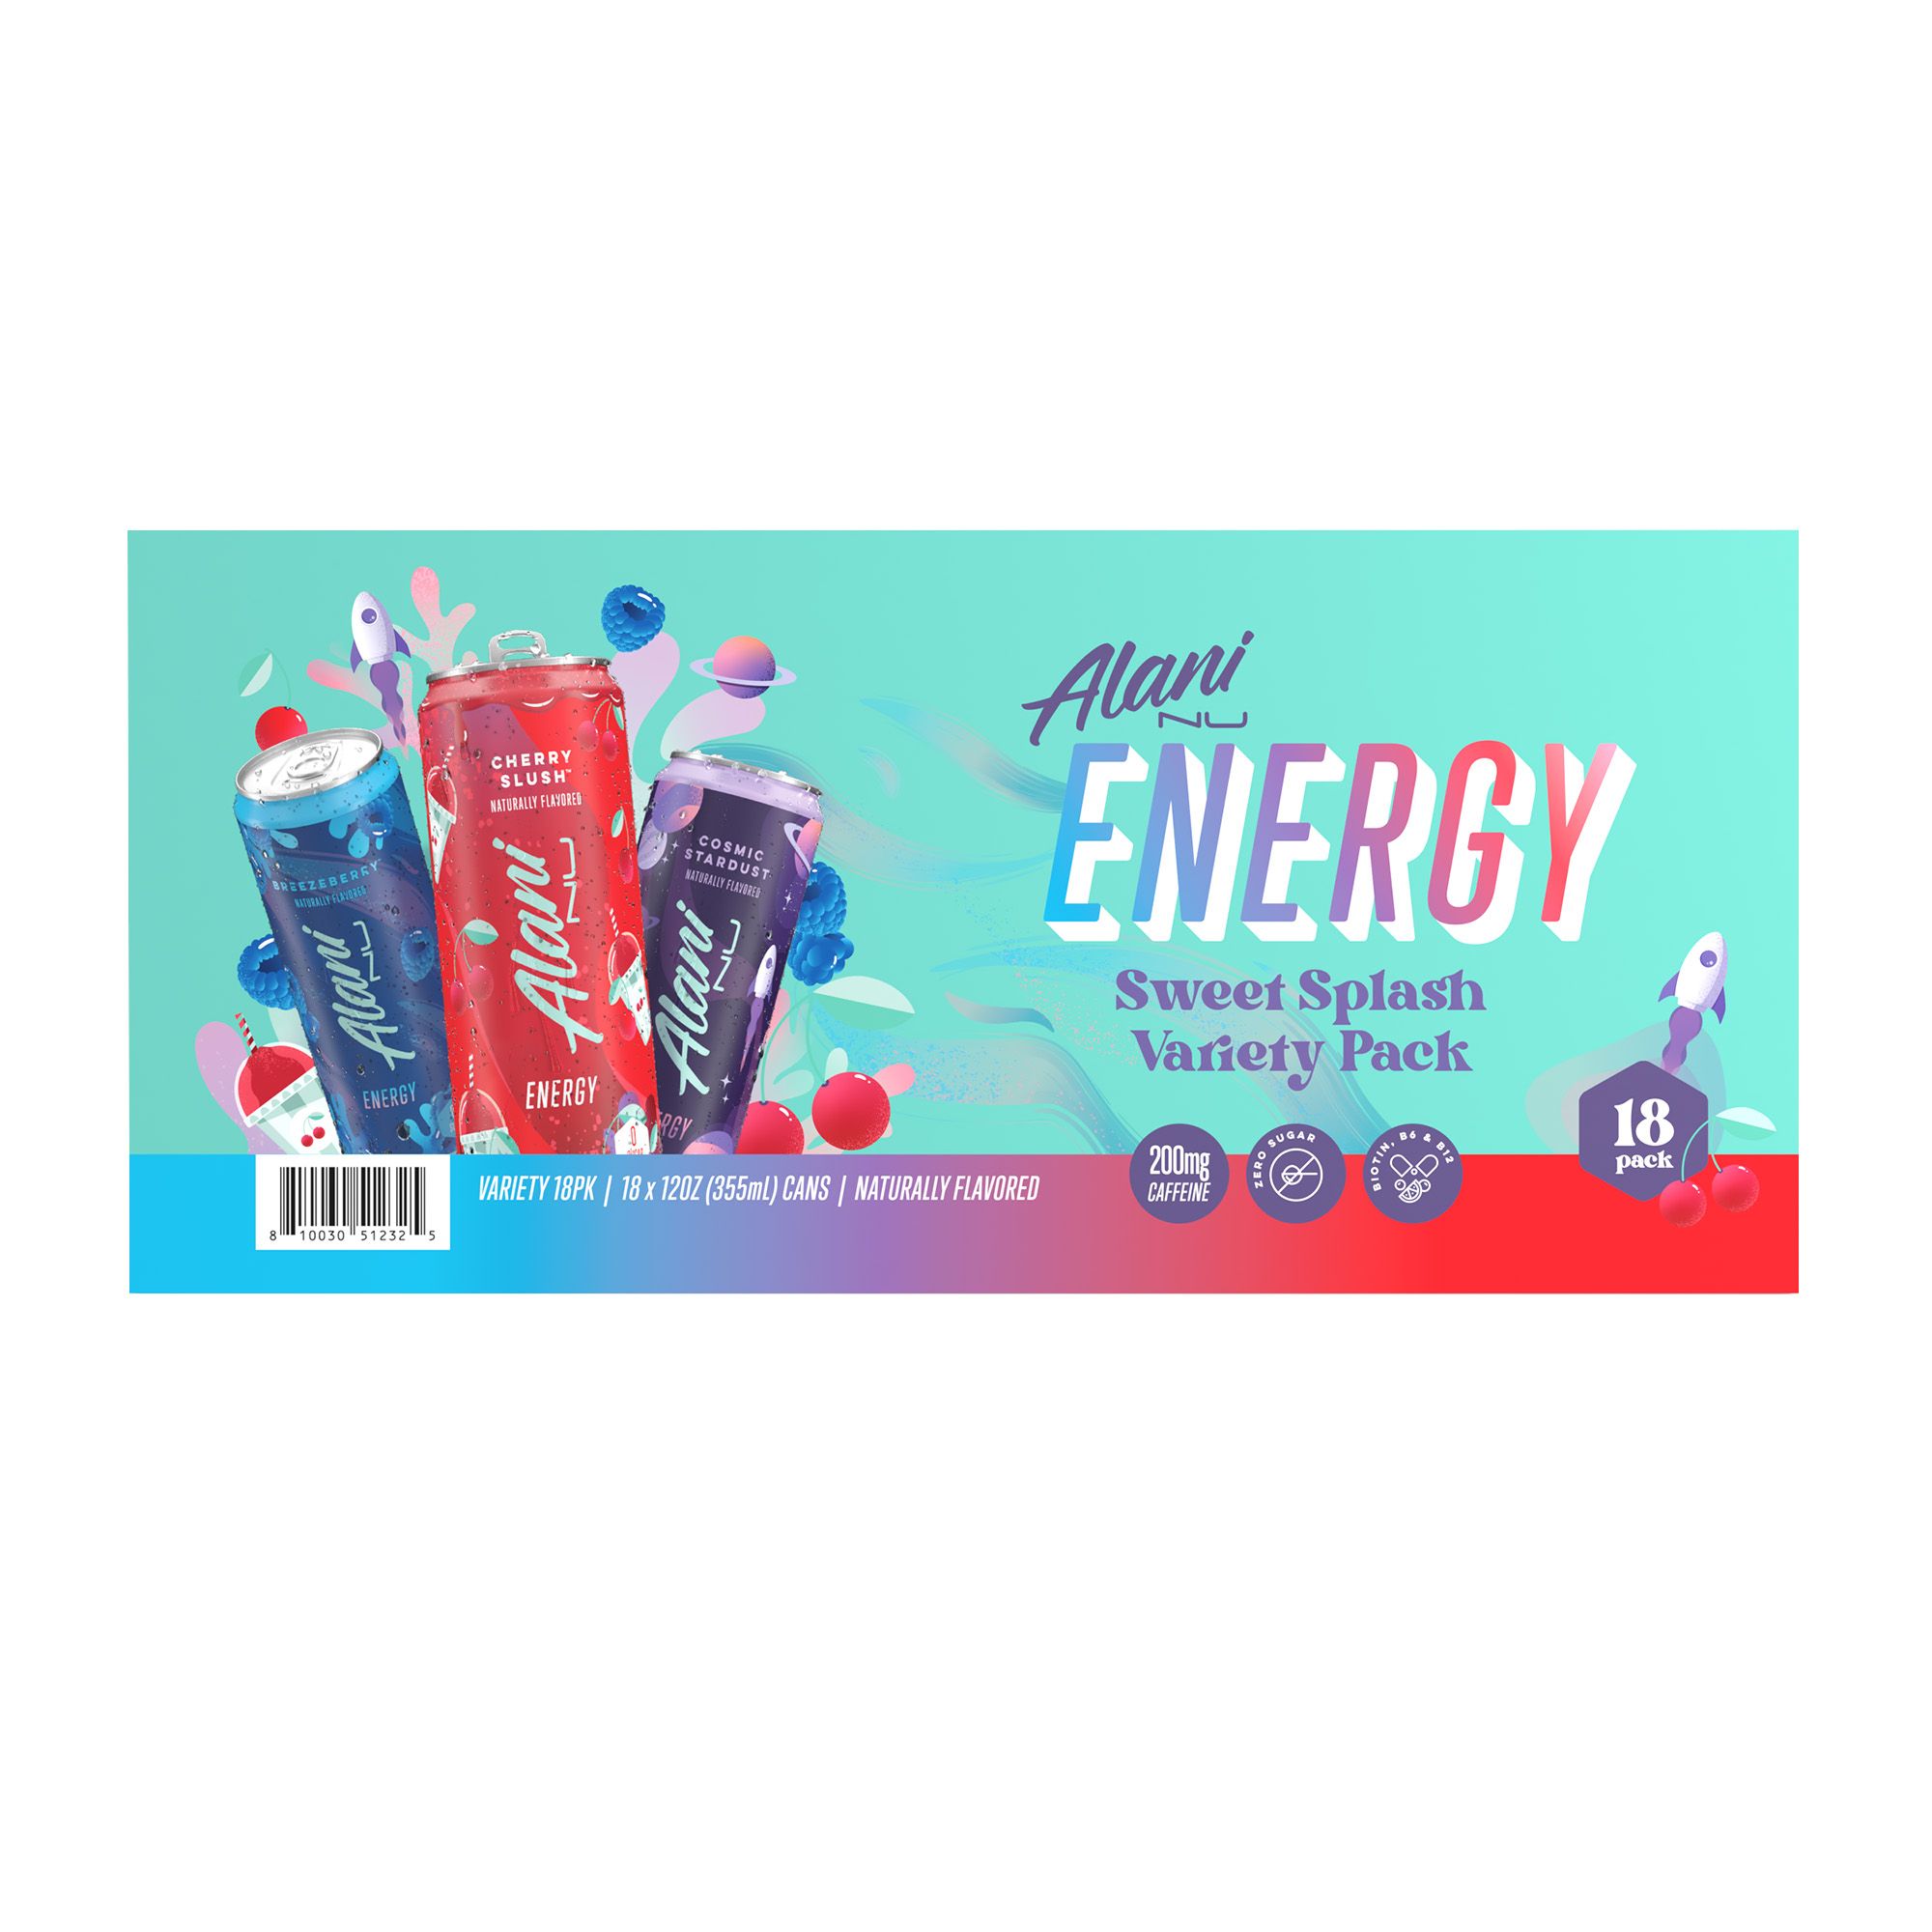 Energy Variety Pack